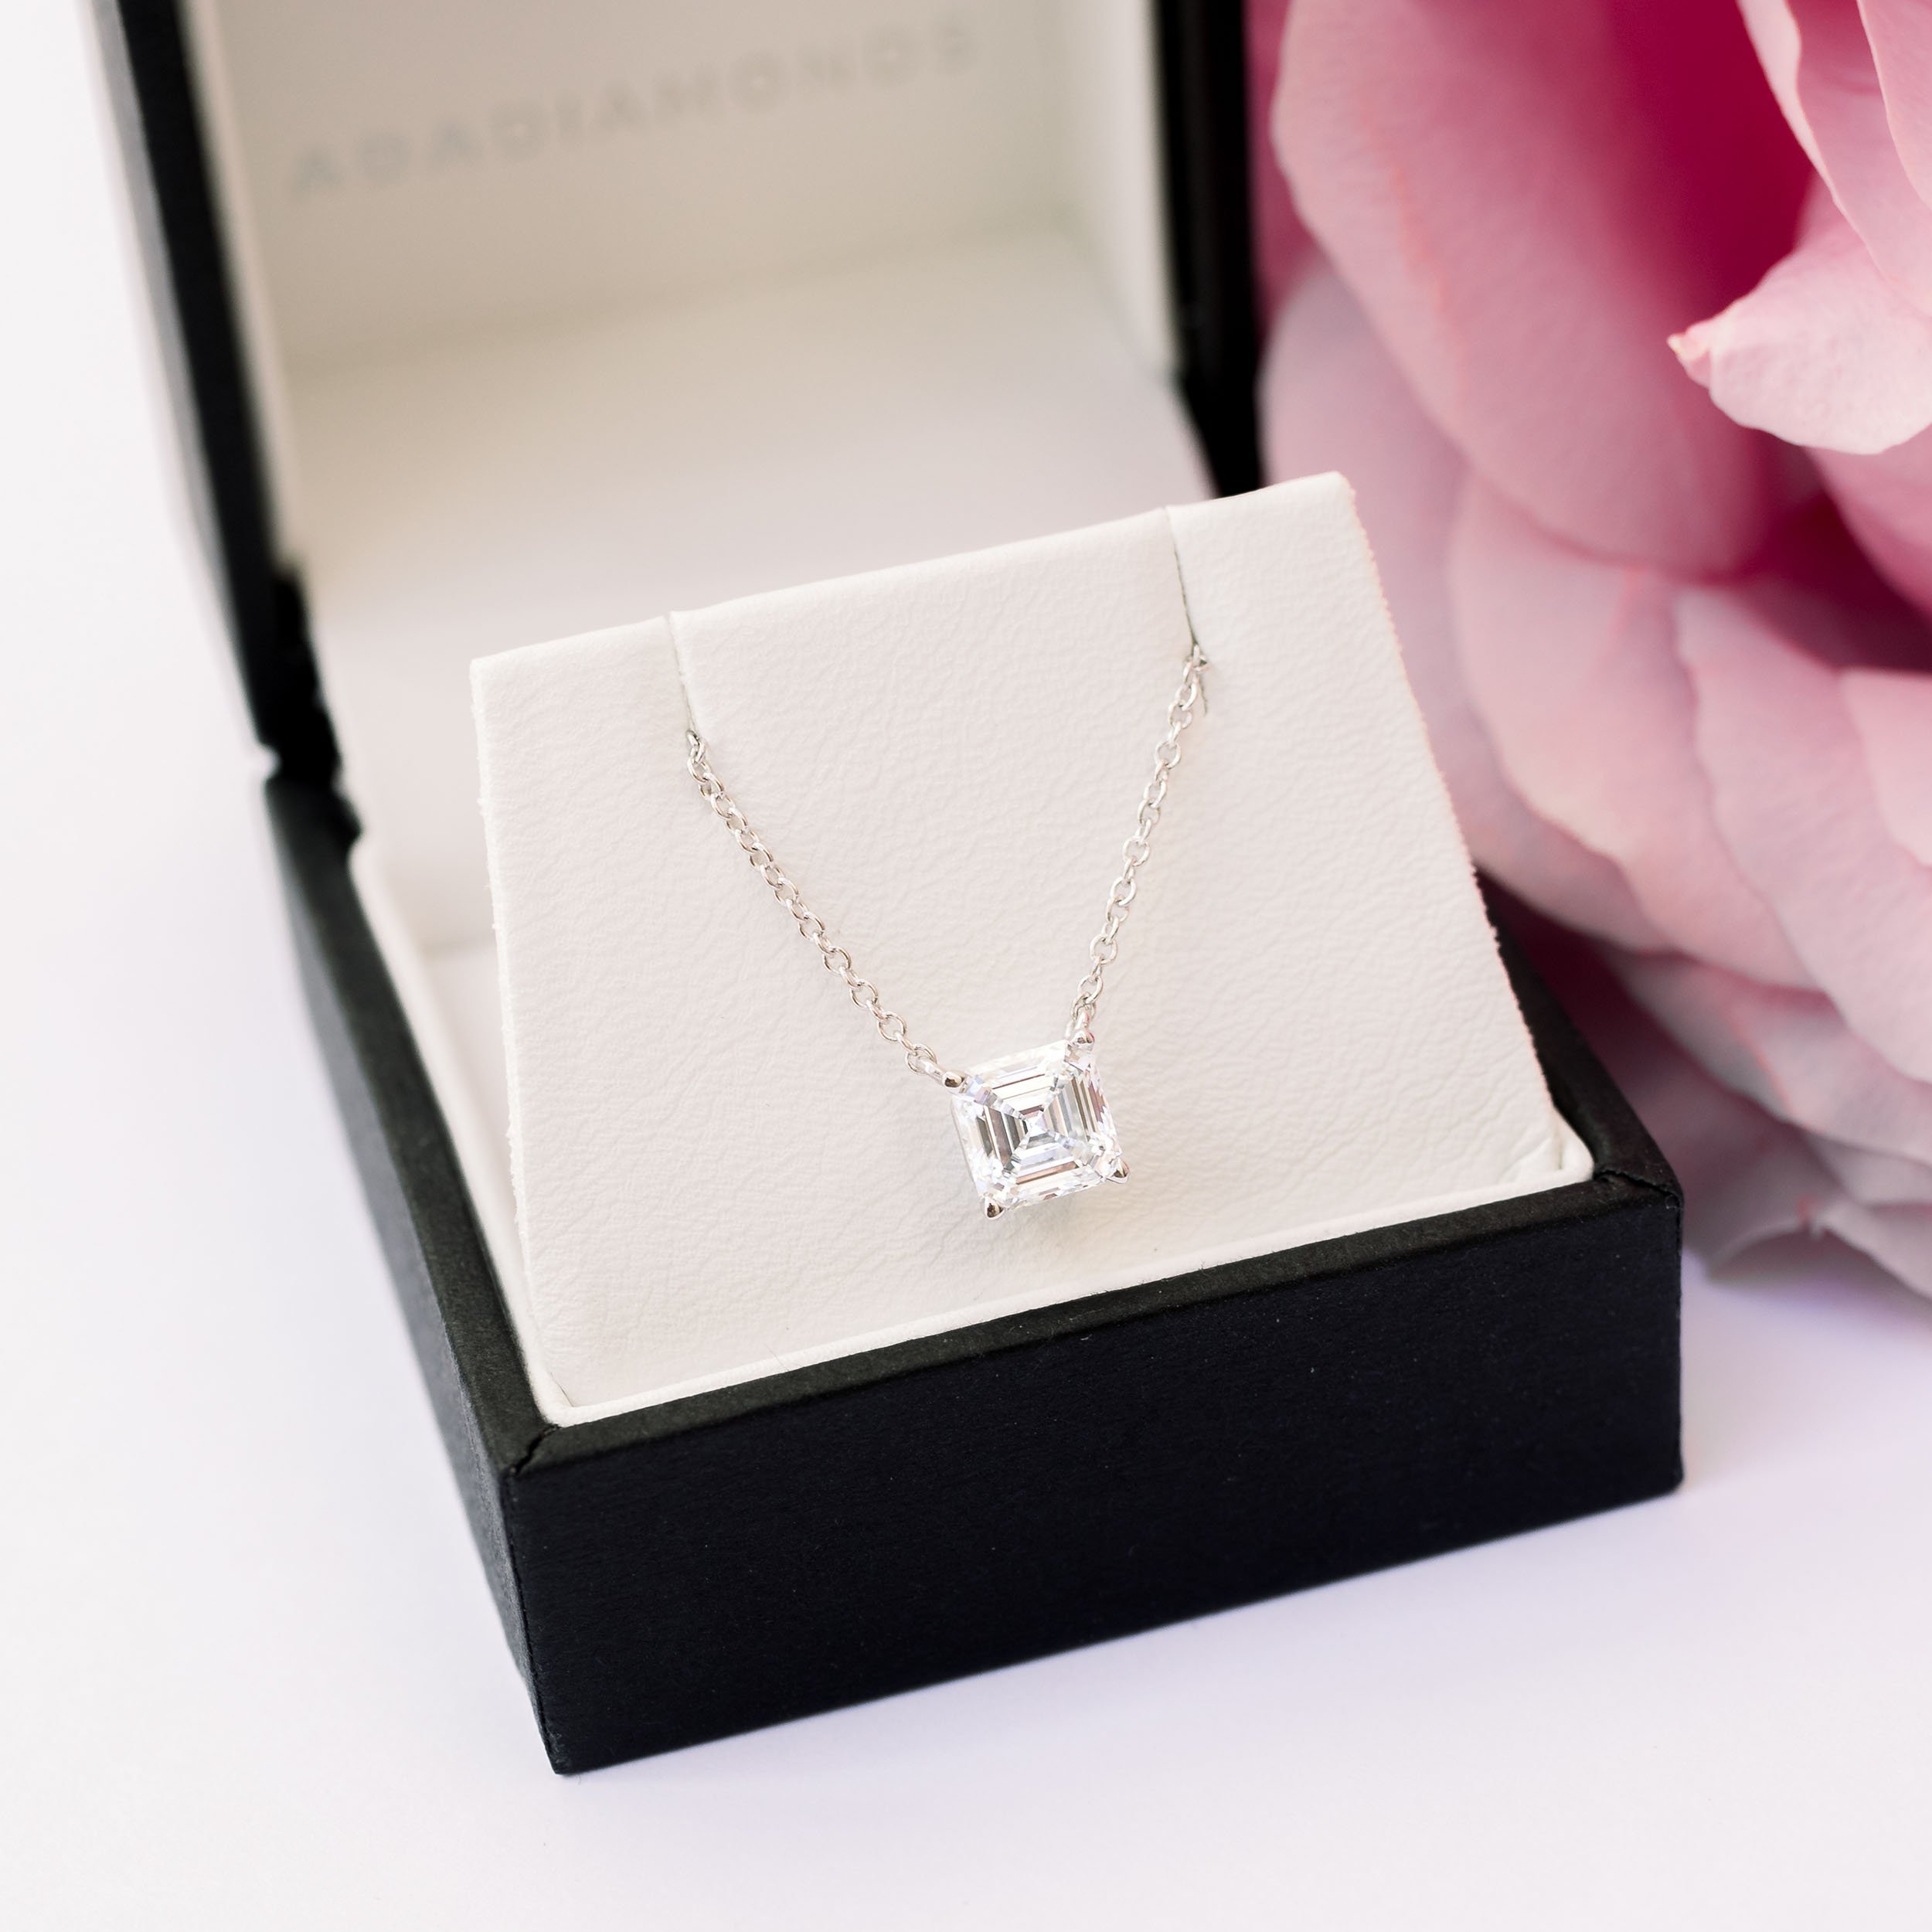 1 Carat Asscher Diamond Necklace Pendant White Gold 14K Women Jewelry